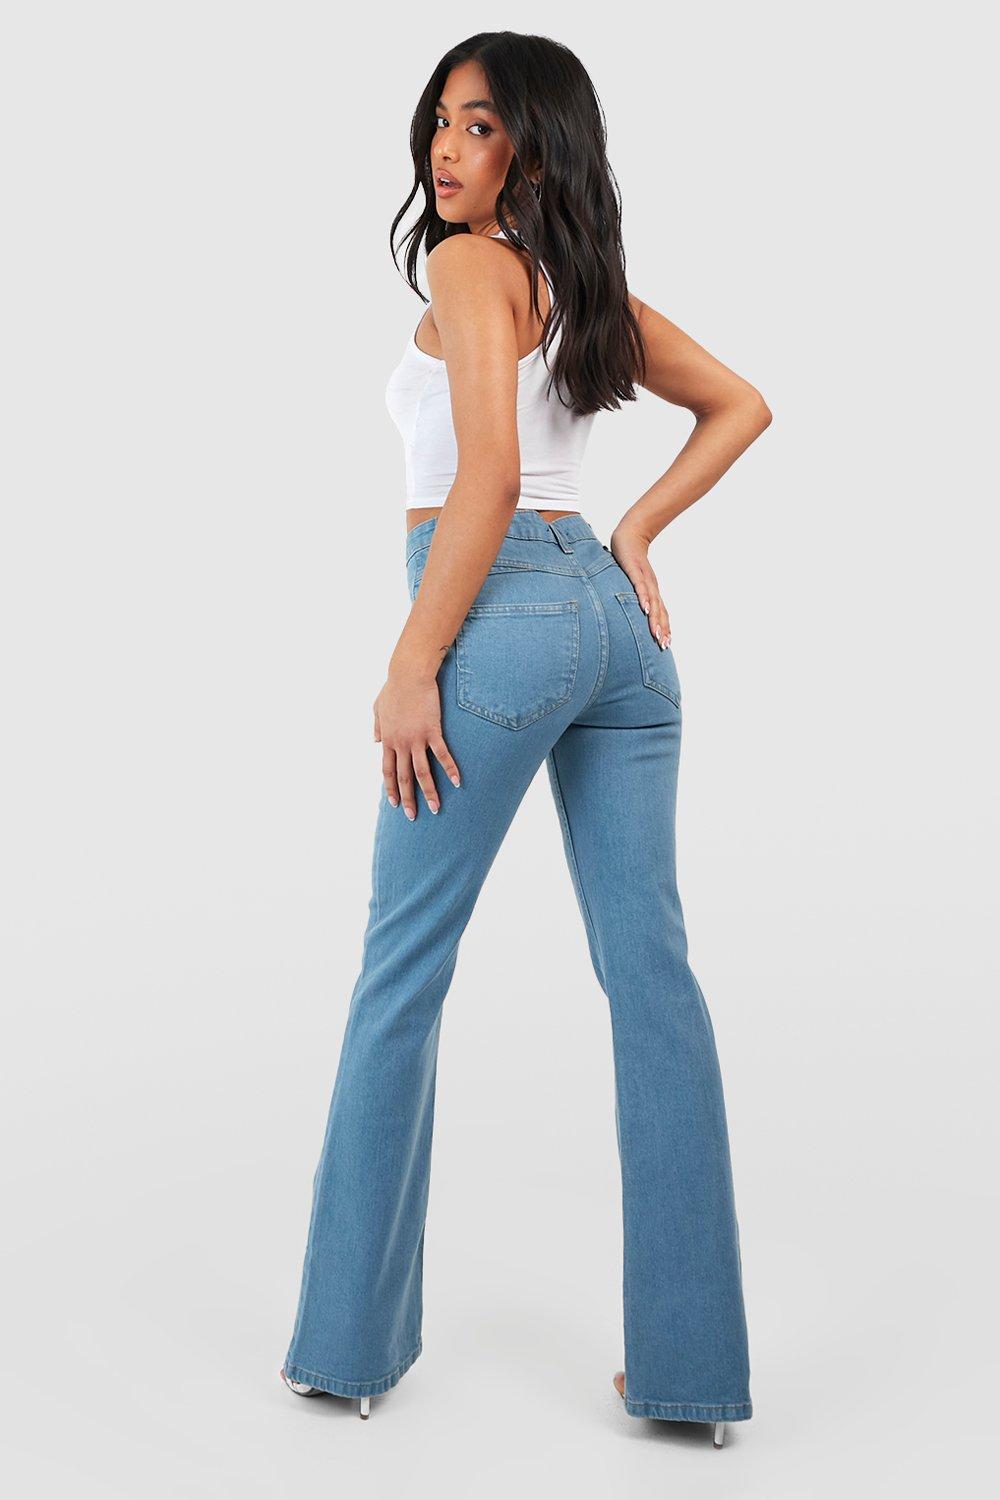 Petite Denim High Waisted Flared Jeans